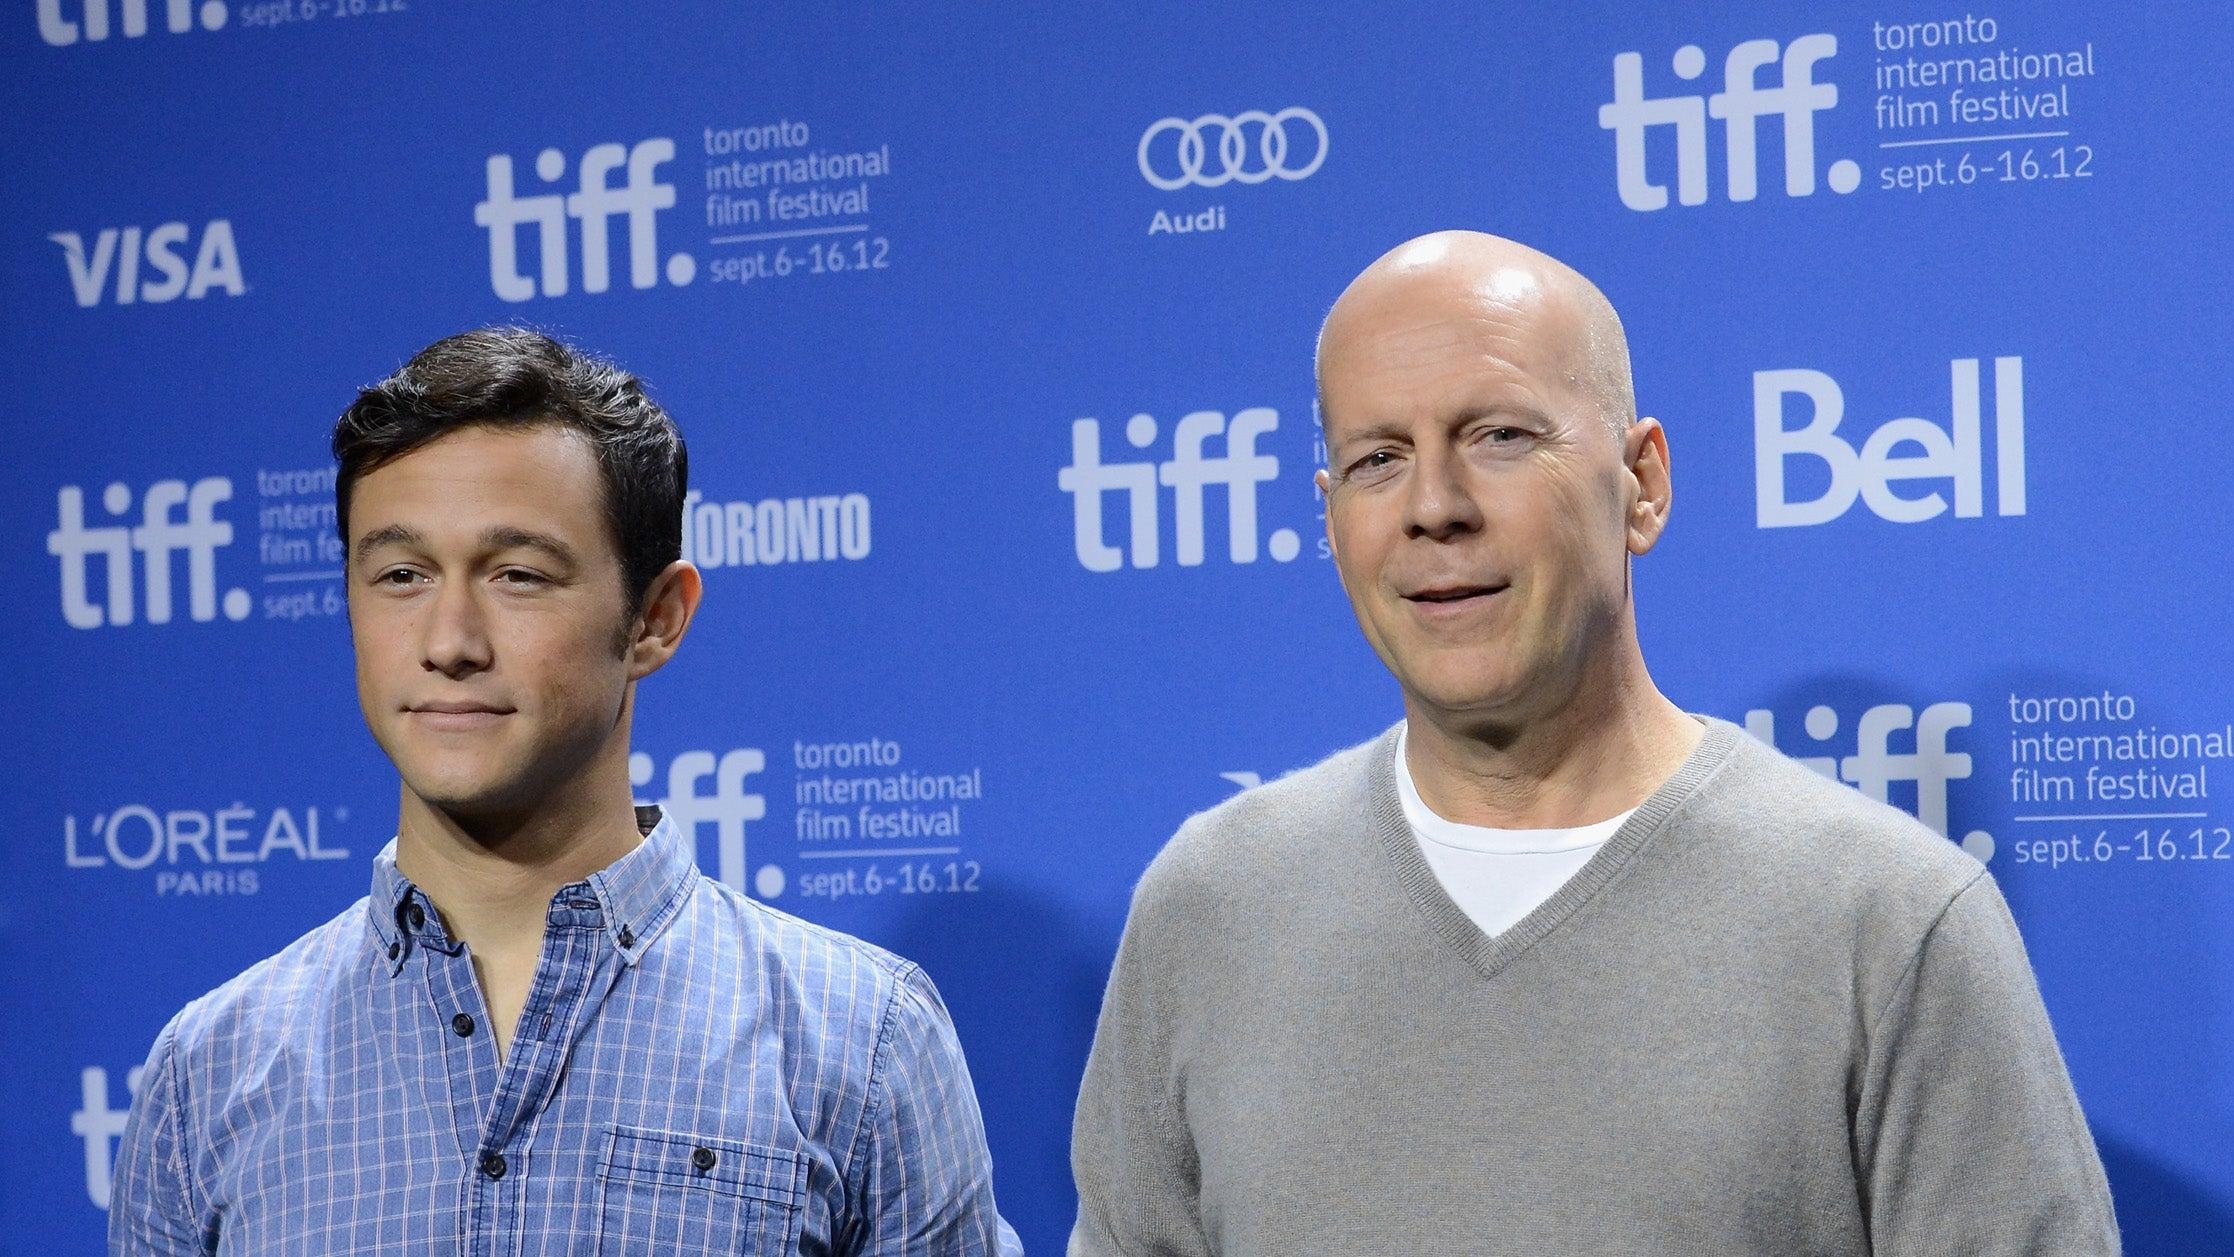 Joseph Gordon-Levitt remembers the “highest compliment” Bruce Willis gave him on the set of Looper